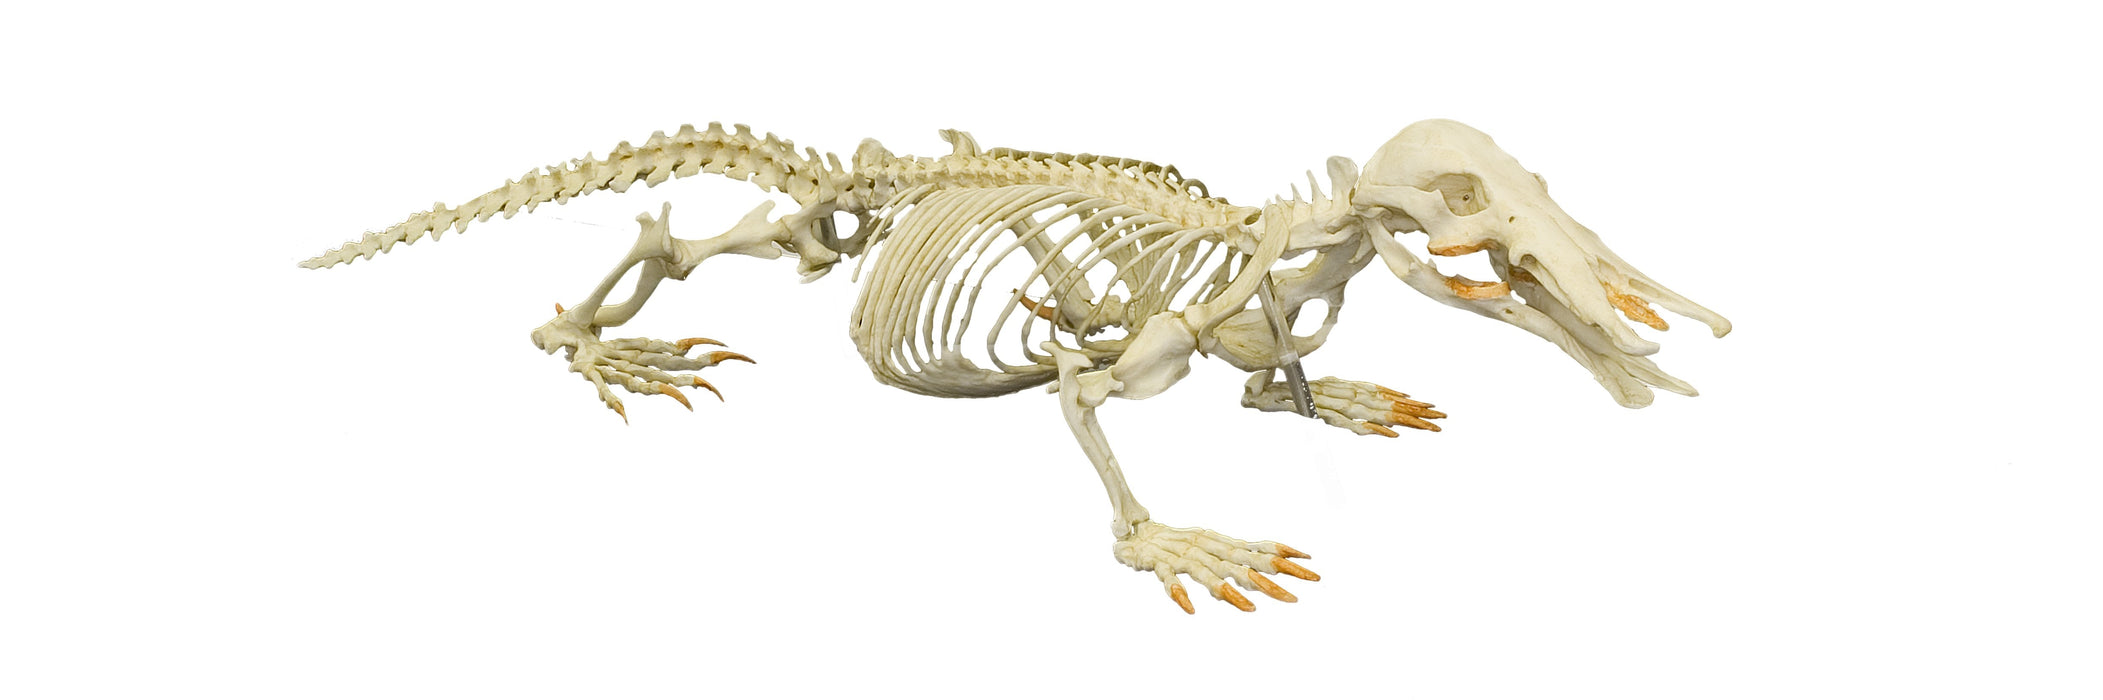 Replica Platypus Skeleton